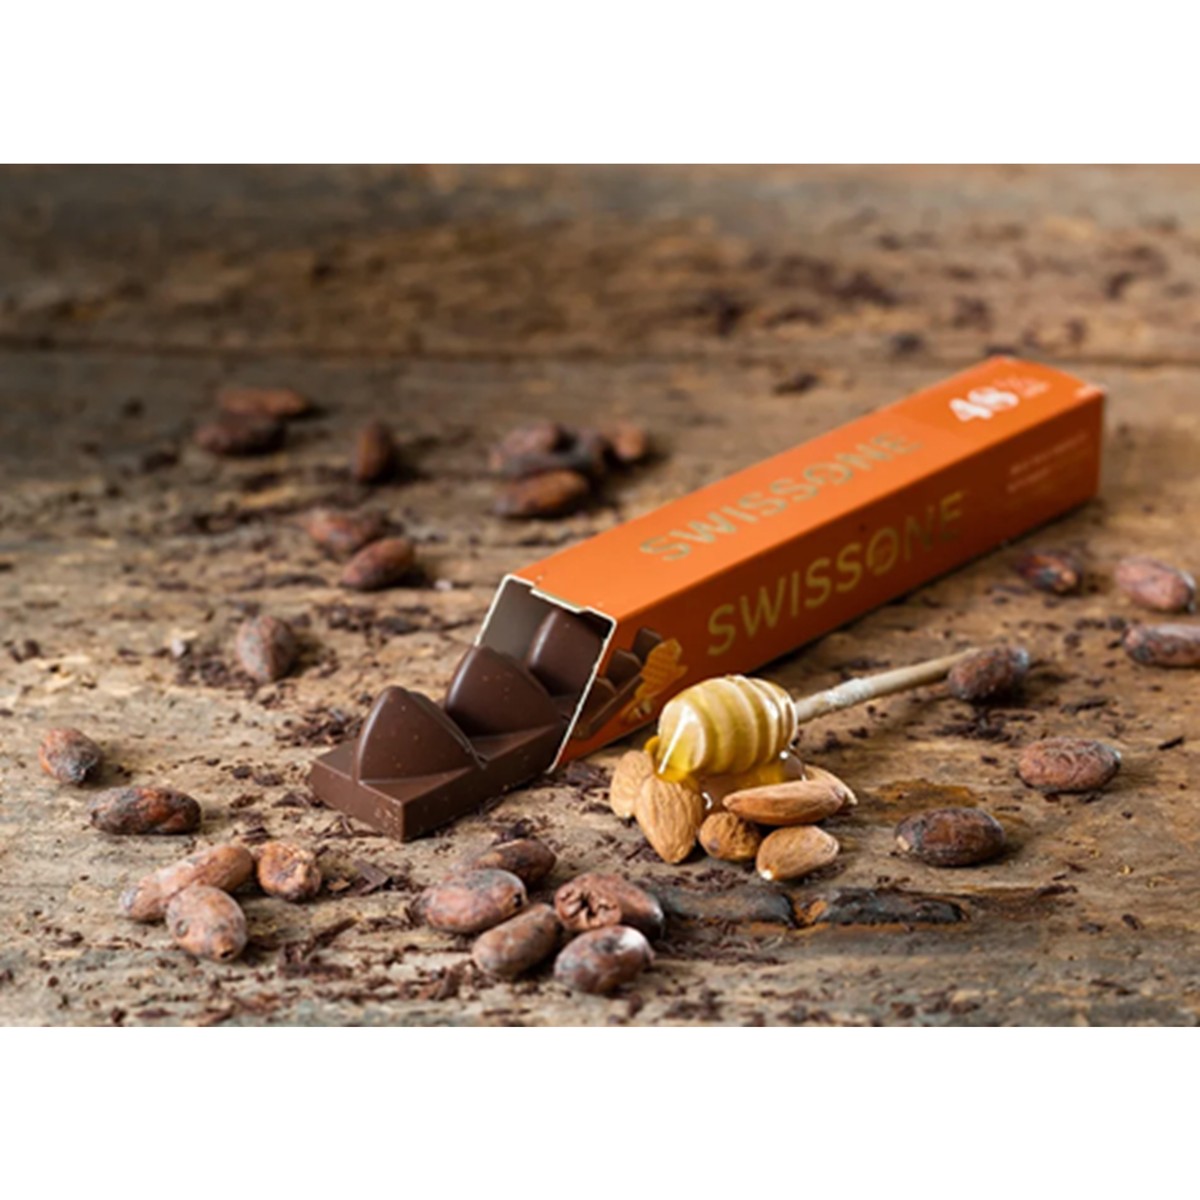   Barre Chocolat Nougatine 48% Swissone  100gr